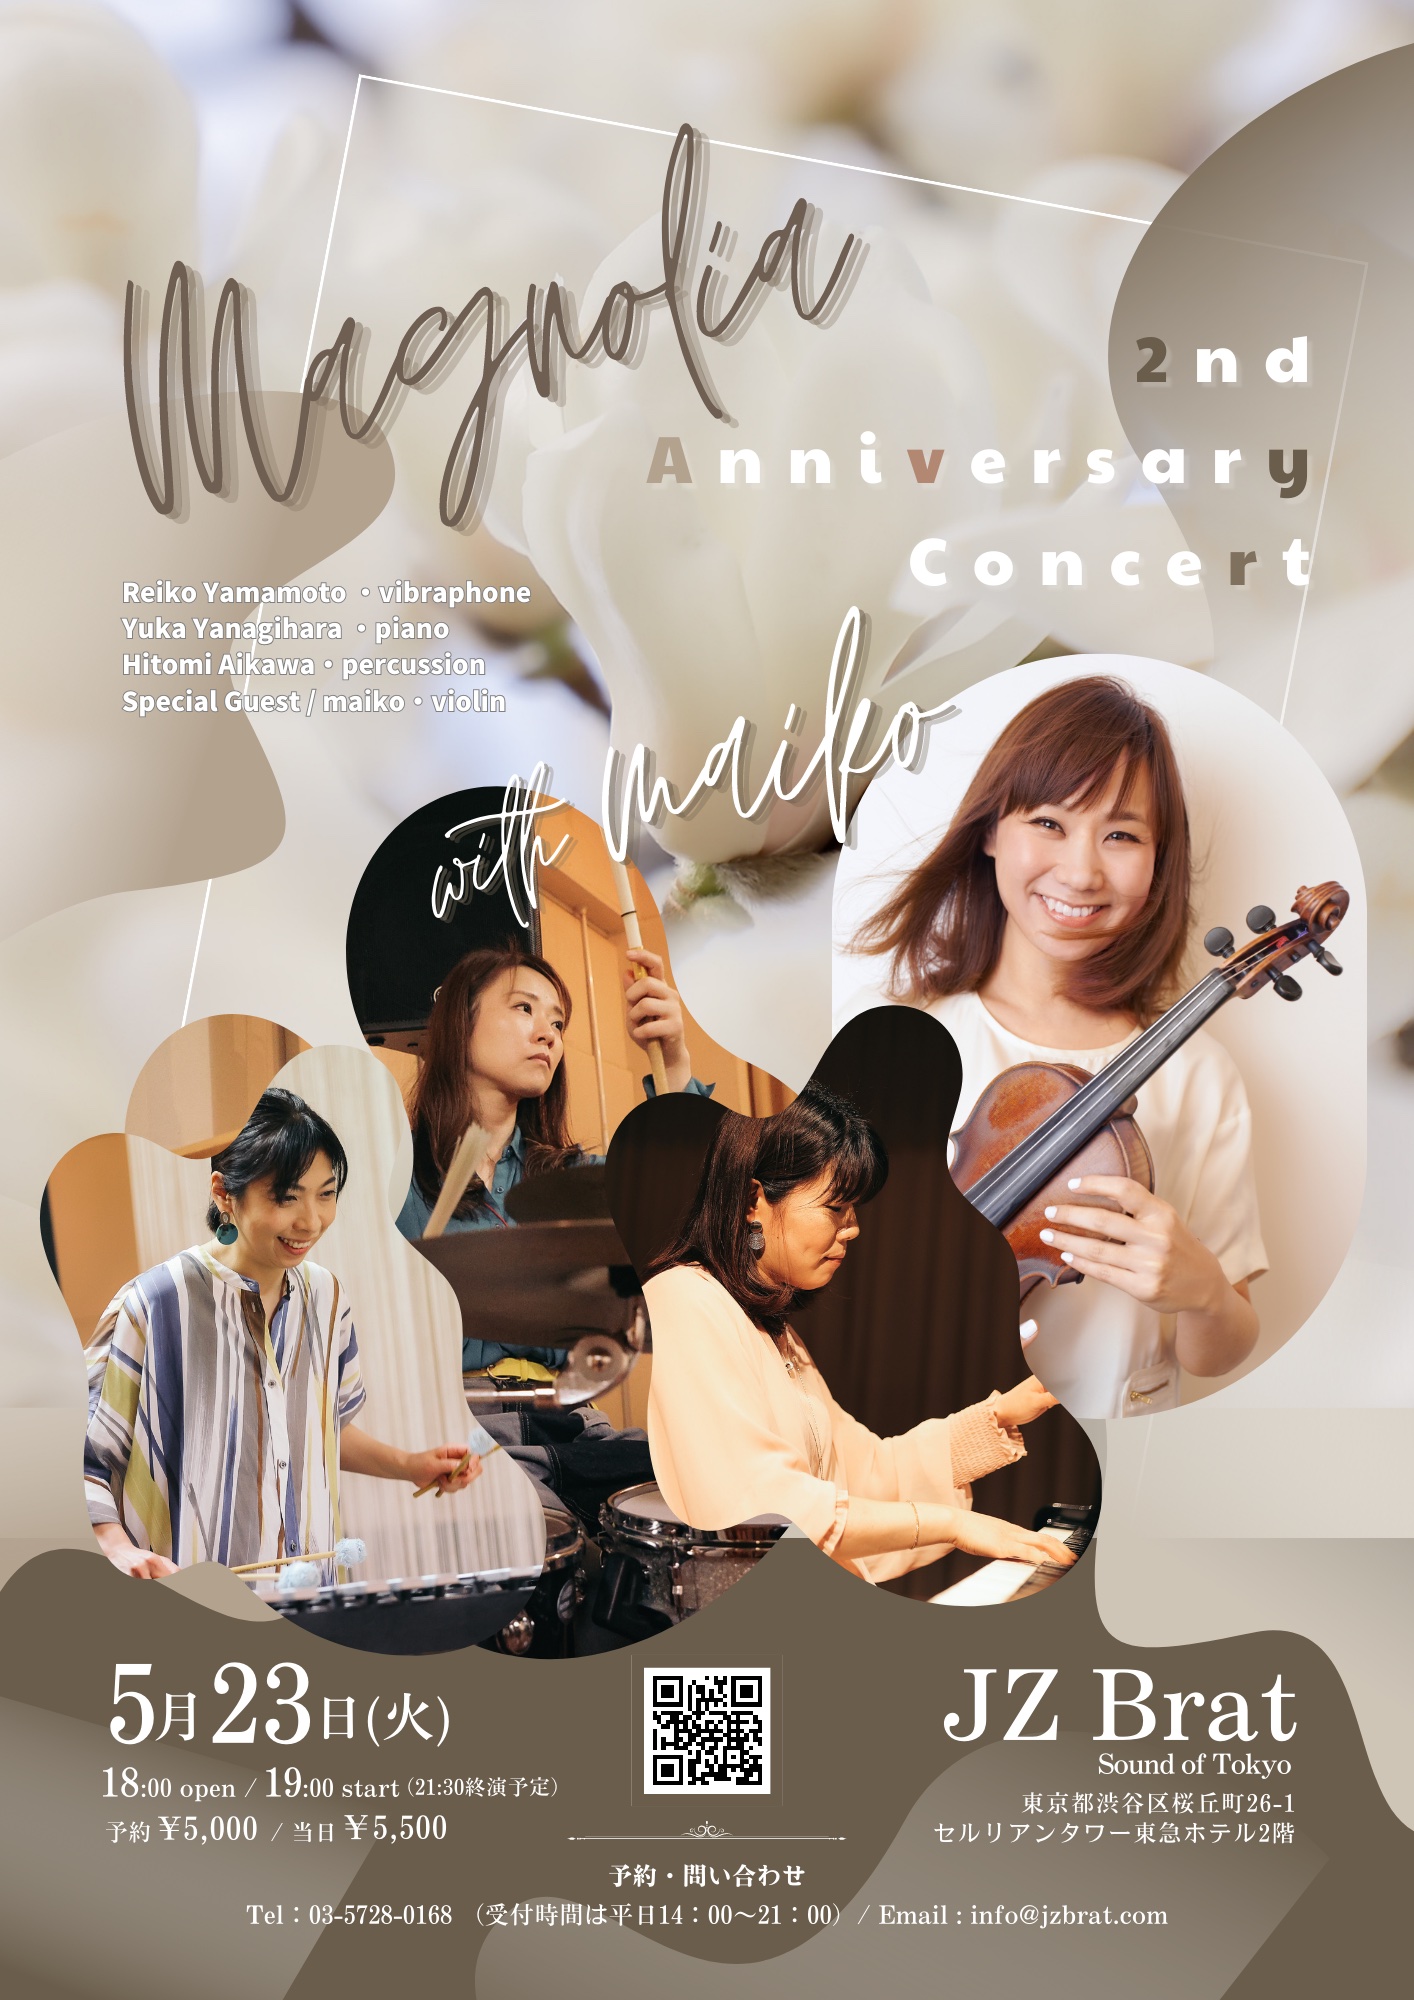 <span class="title">5月23日(火)Magnolia２周年記念コンサート！</span>